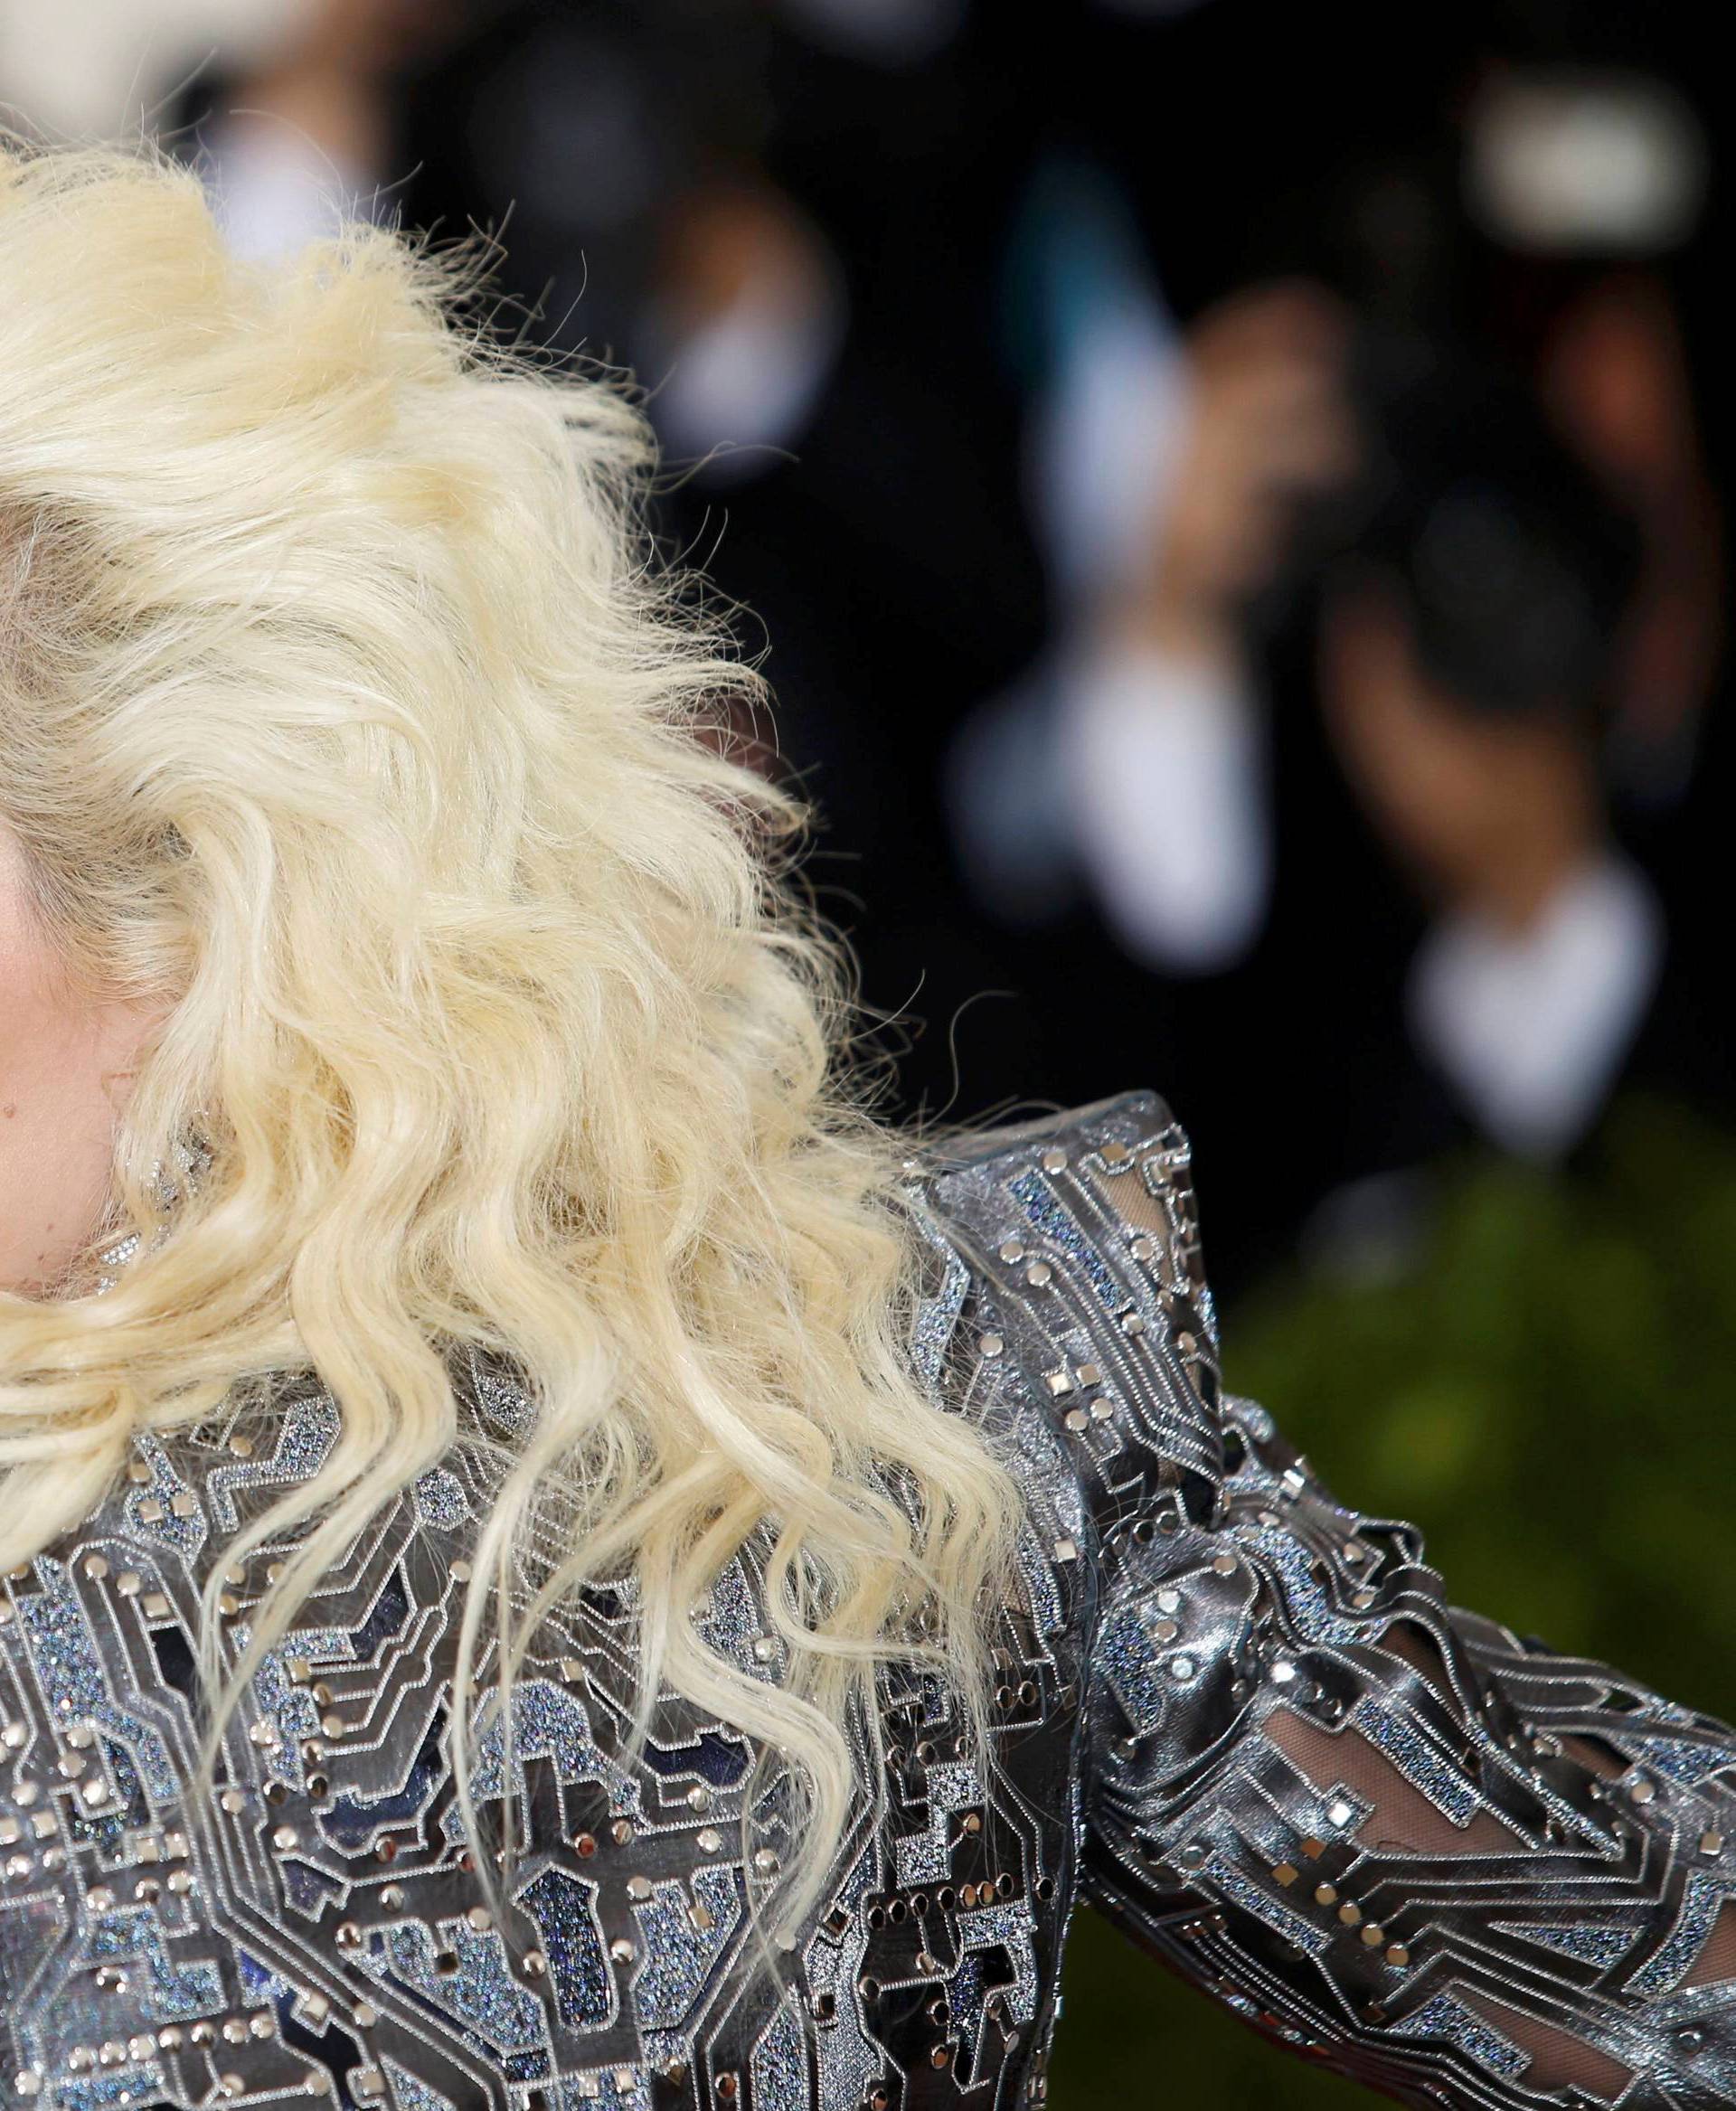 Singer-songwriter Lady Gaga arrives at the Met Gala in New York